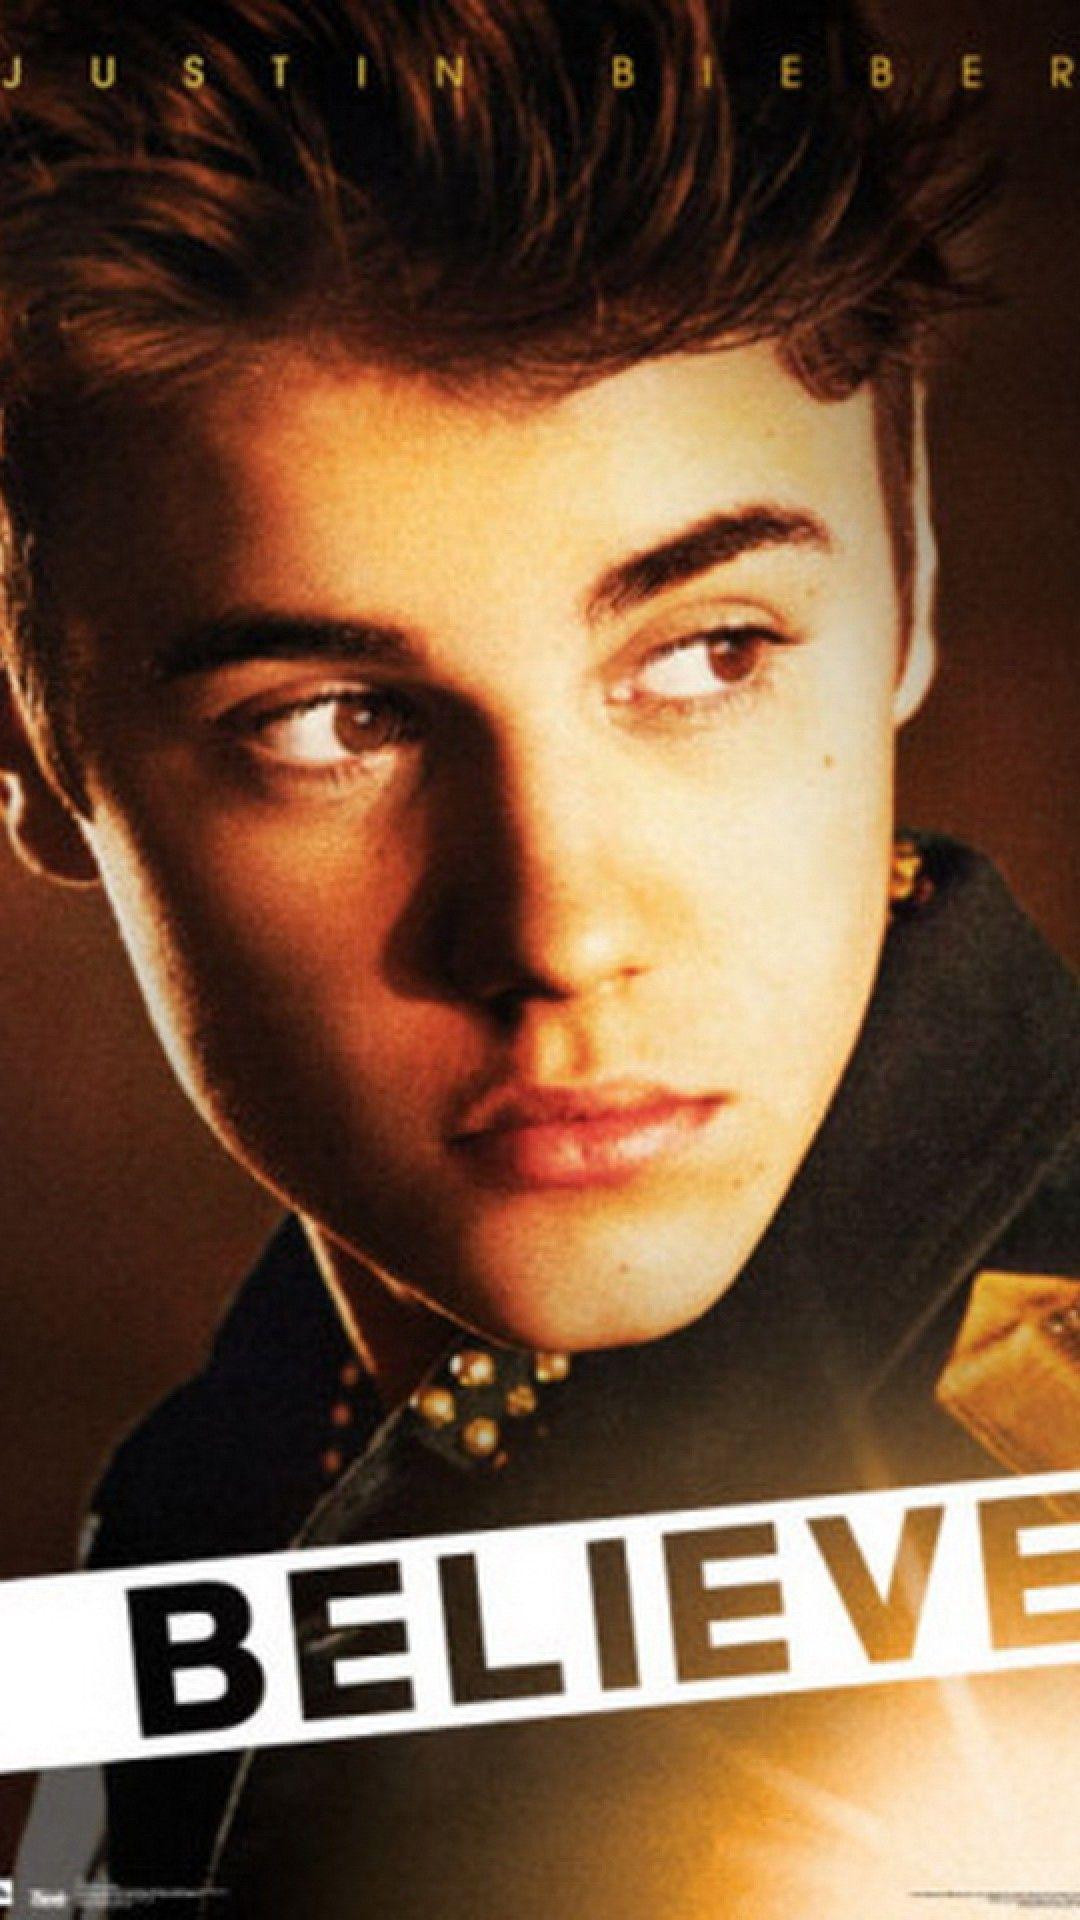 Justin Bieber Wallpaper For IPhone